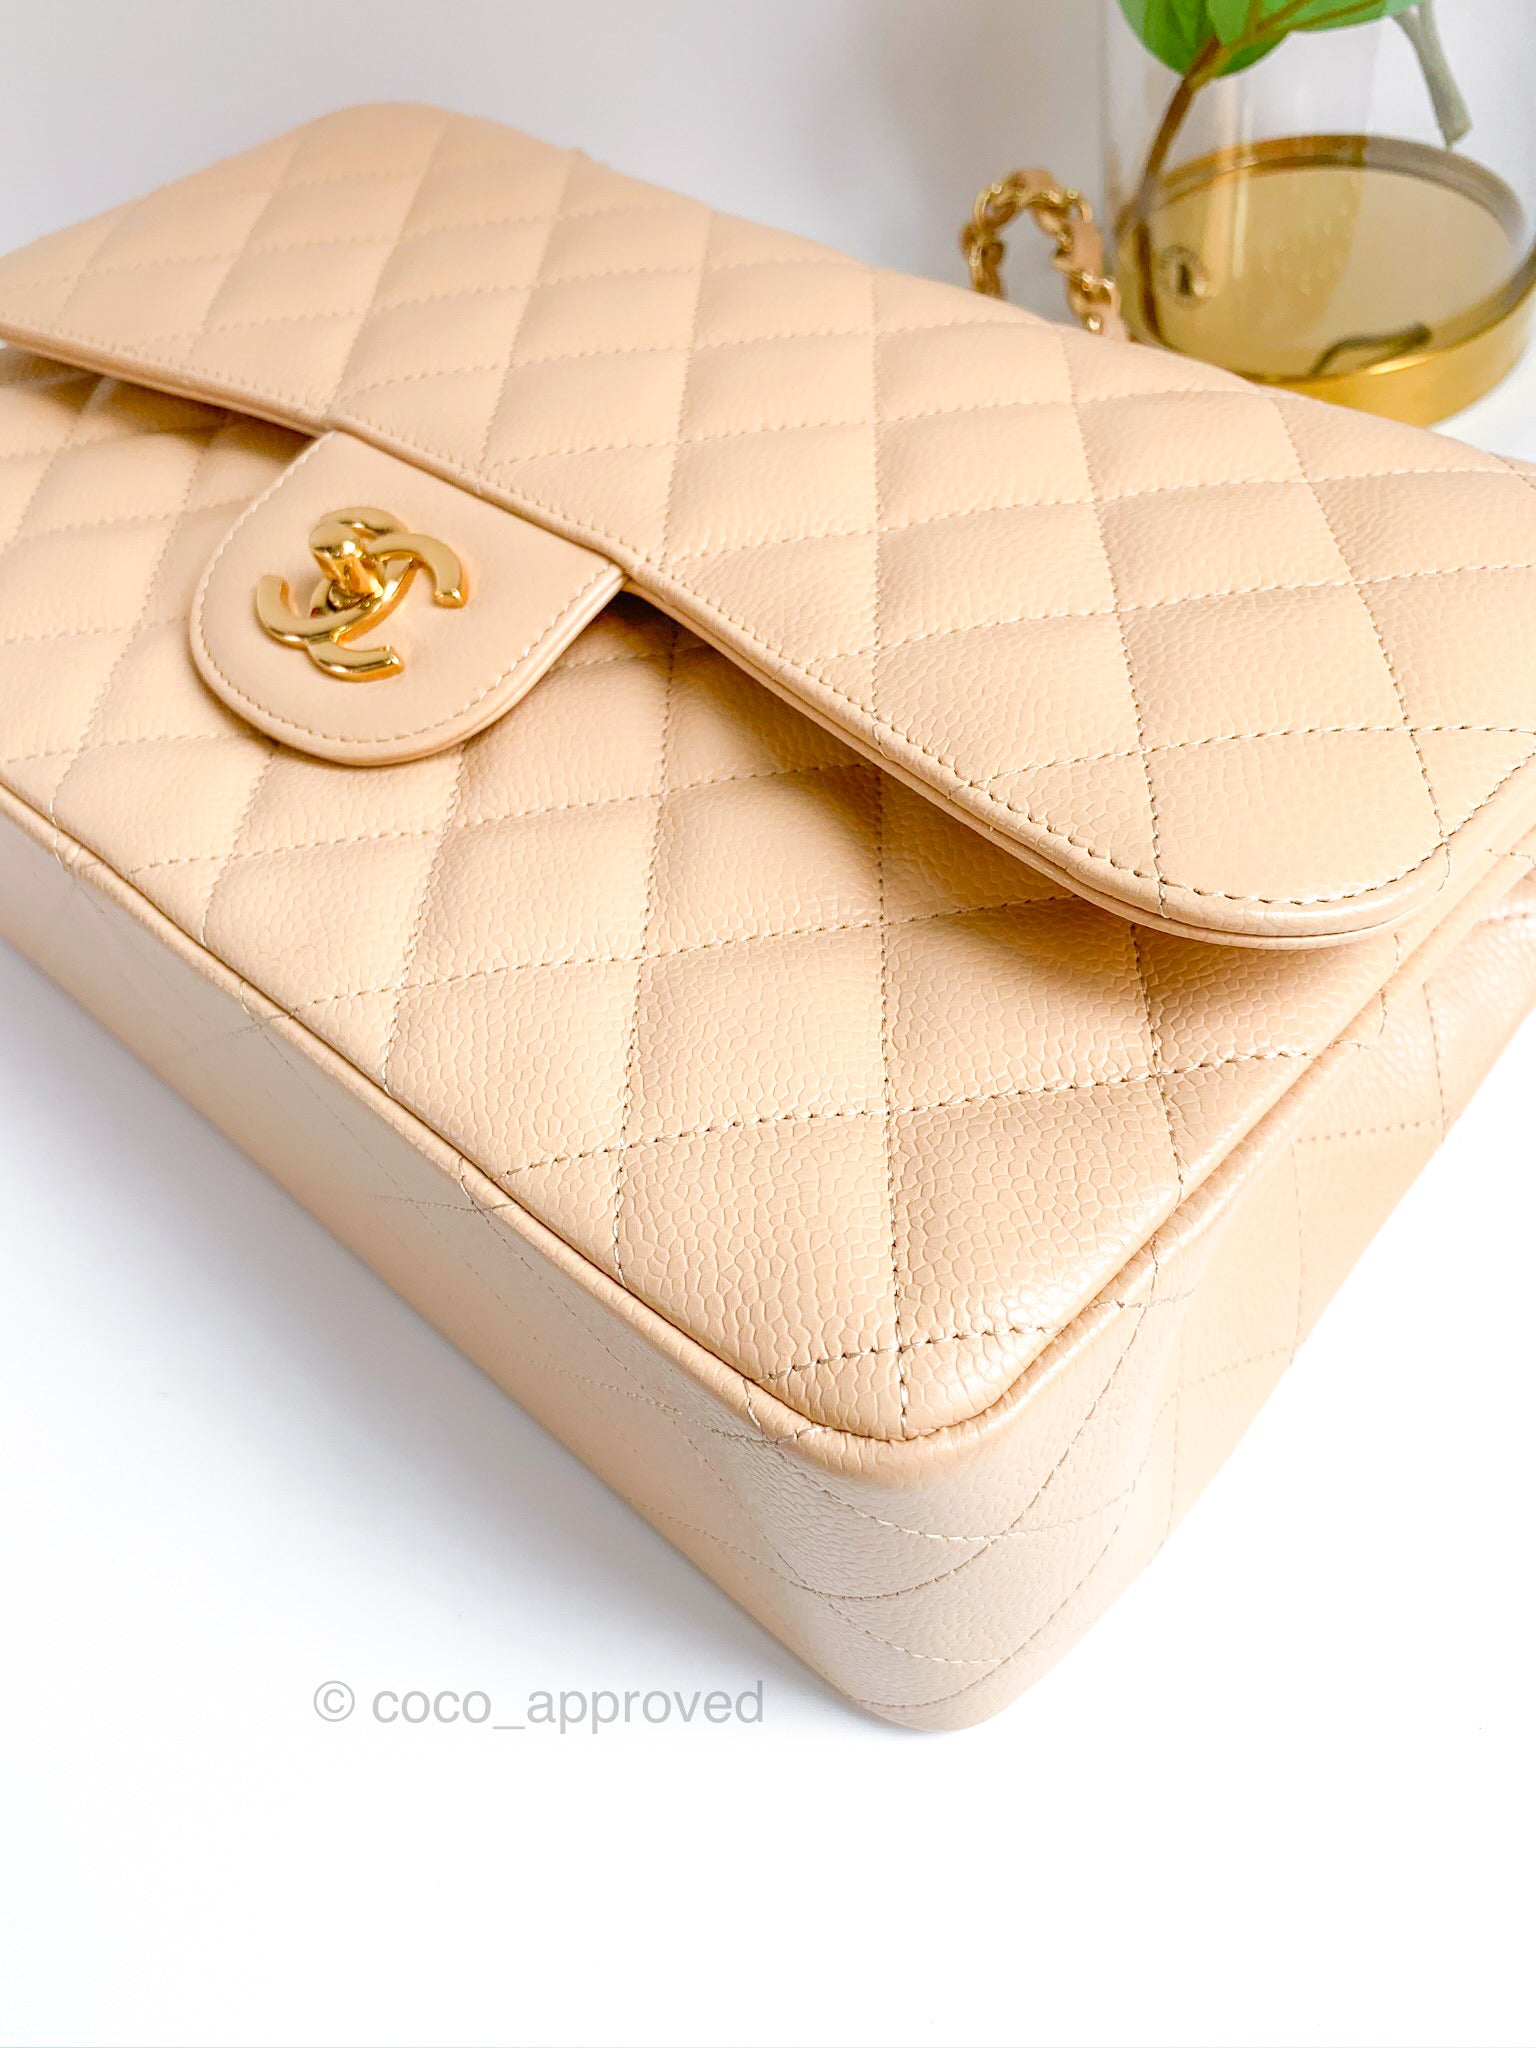 Chanel Jumbo Classic Double Flap Bag Dark Beige Caviar Gold Hardware –  Madison Avenue Couture